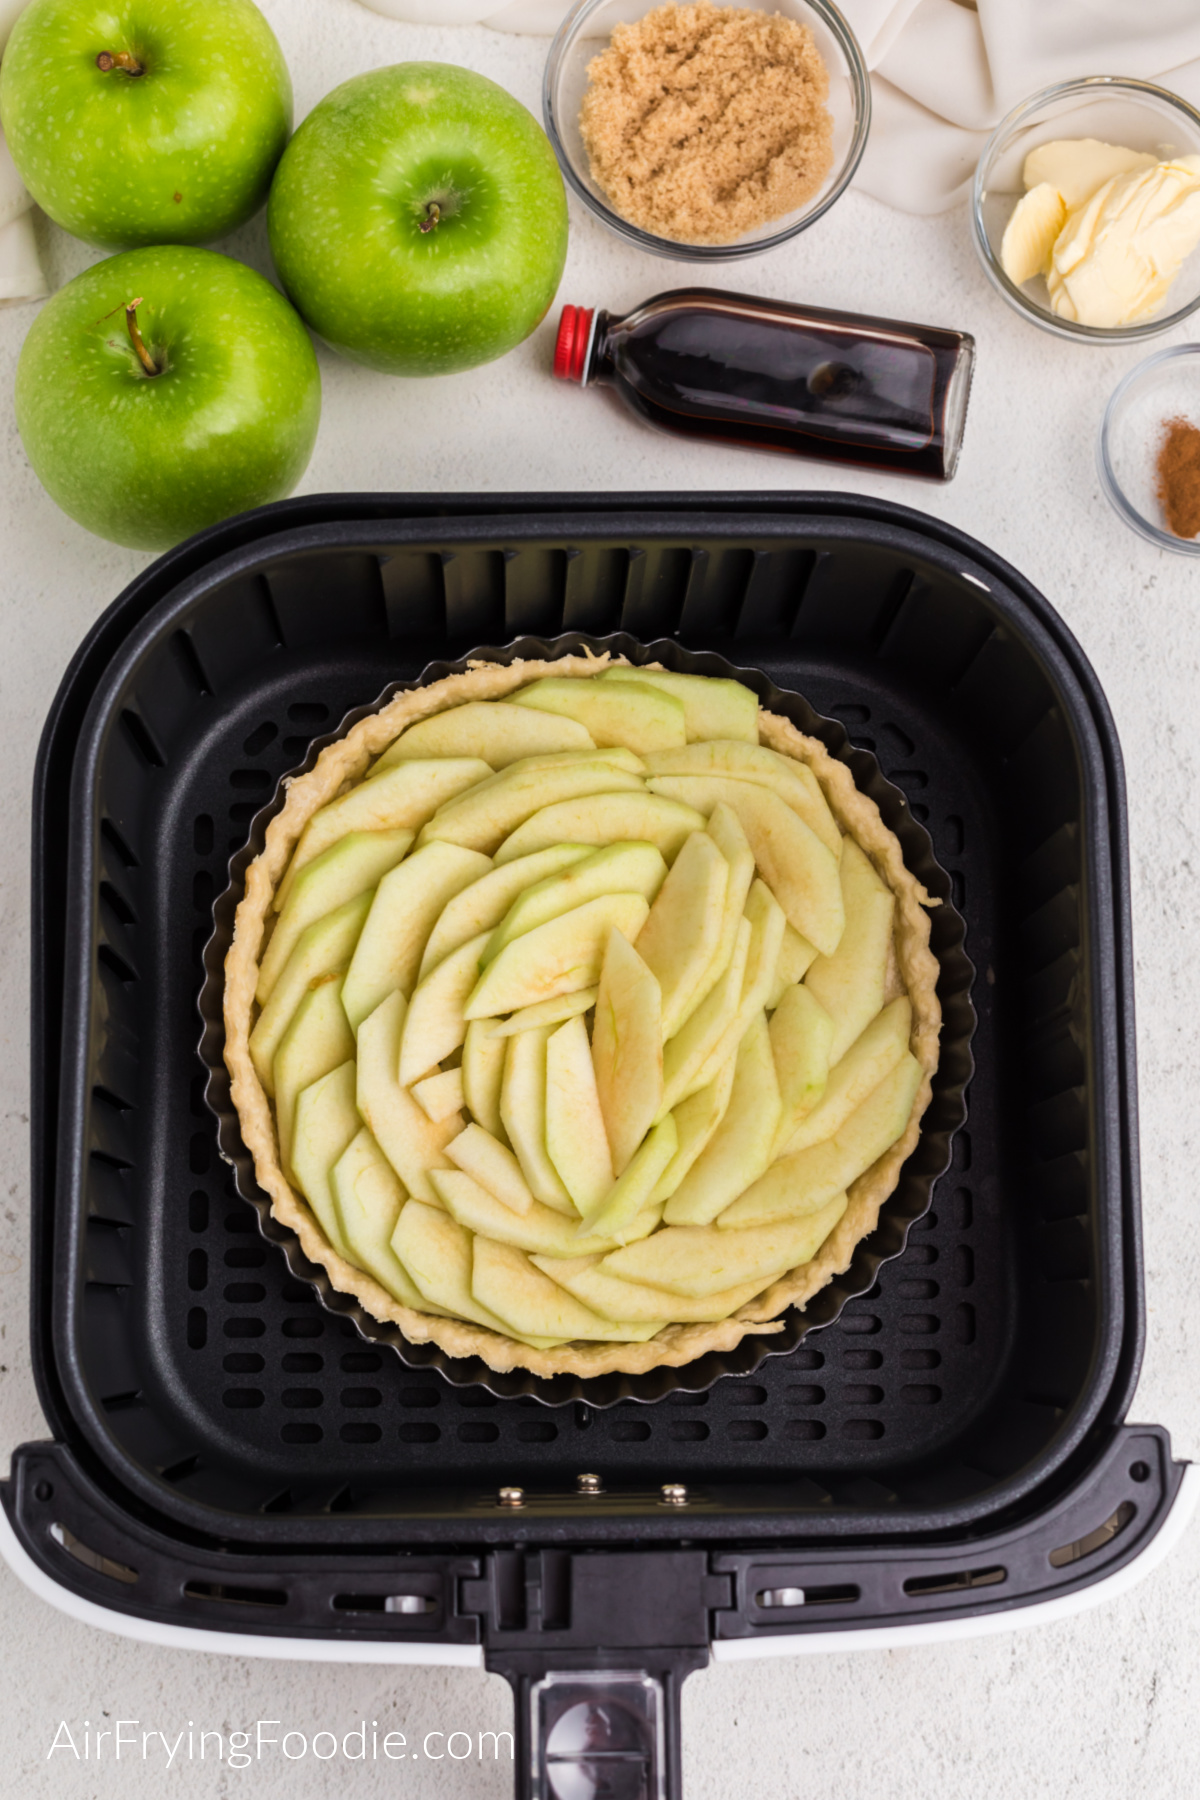 Sliced apples arranged ver the pie crust in the tart pan.